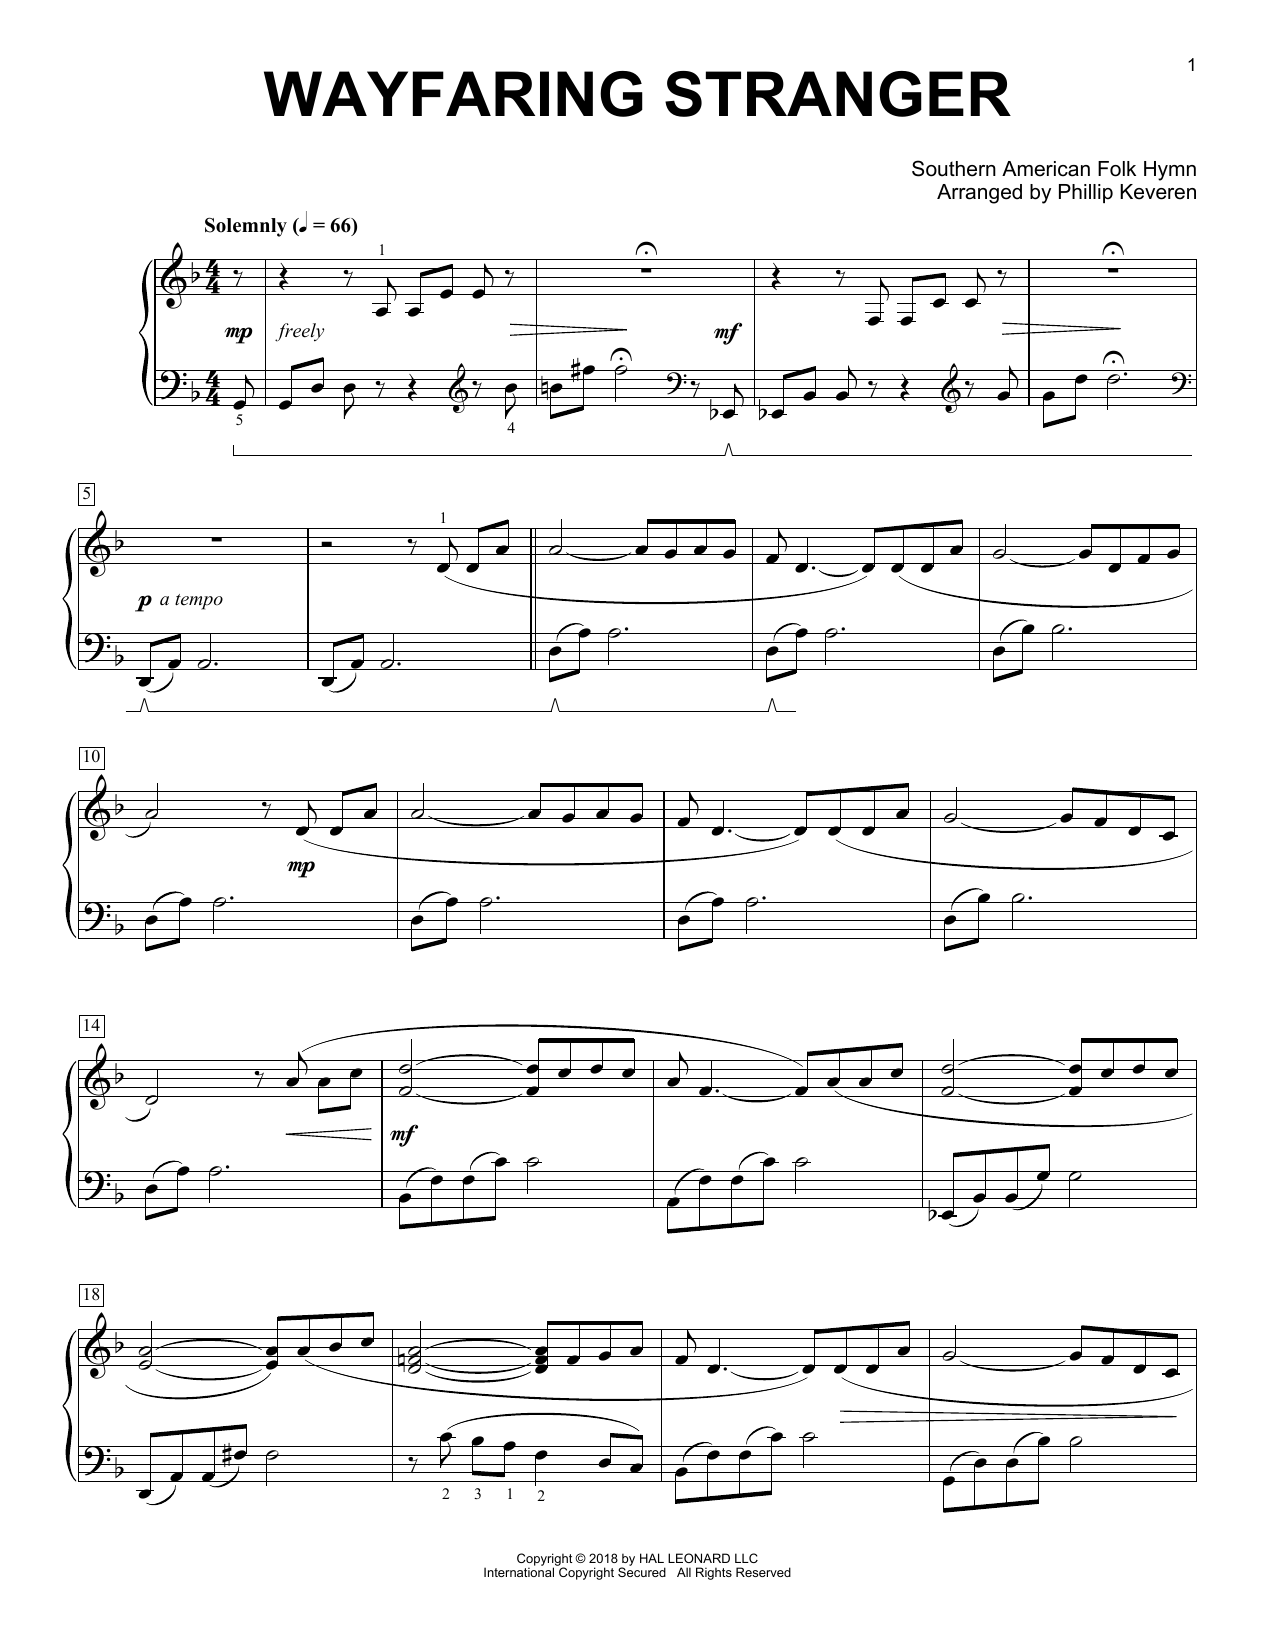 Southern American Folk Hymn Wayfaring Stranger [Classical version] (arr. Phillip Keveren) Sheet Music Notes & Chords for Piano - Download or Print PDF